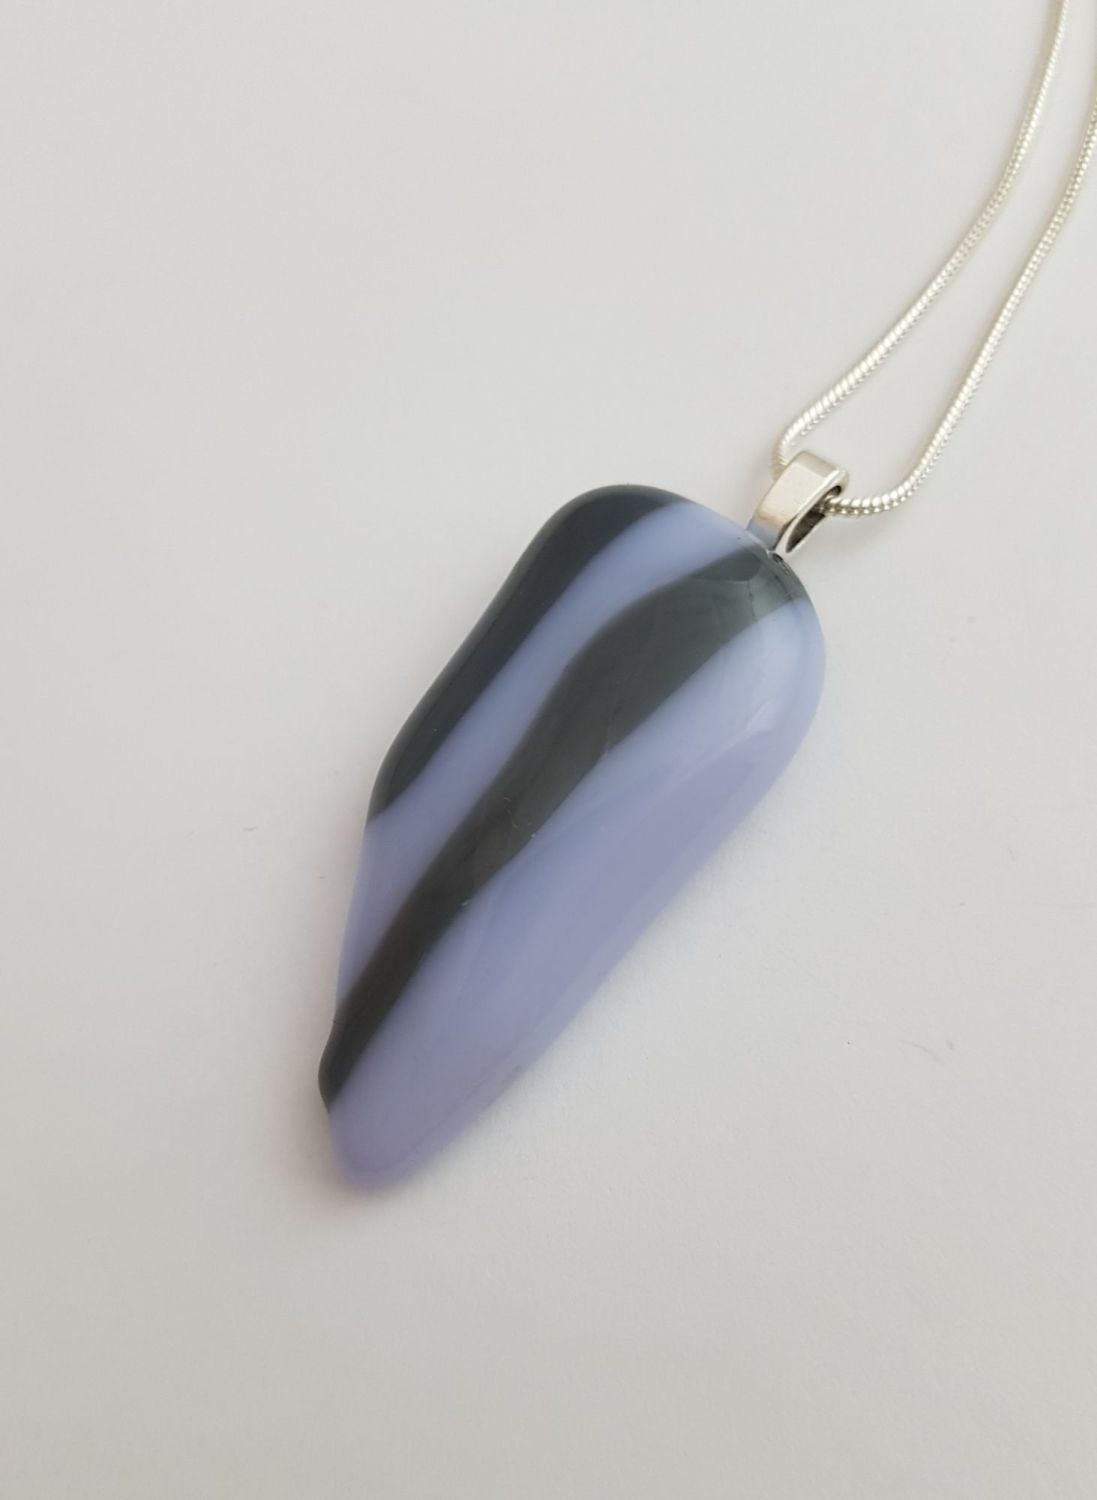 Mauve and dark grey pebble pendant